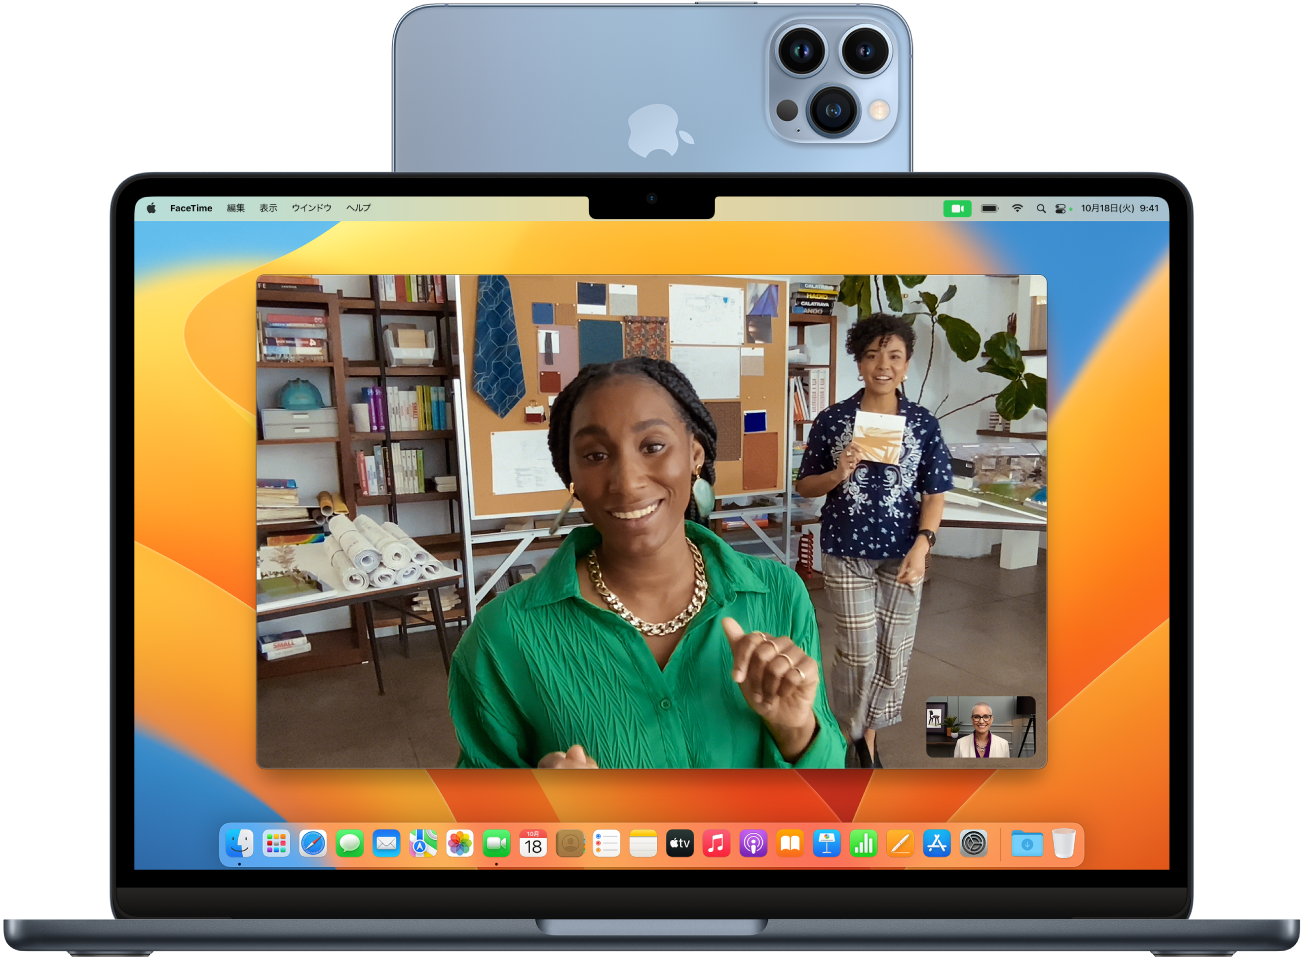 MacとiPhone。Macのディスプレイの上部に取り付けられたWebカメラとしてiPhoneが使用されています。iPhoneのカメラからの映像がMacのディスプレイに表示されています。